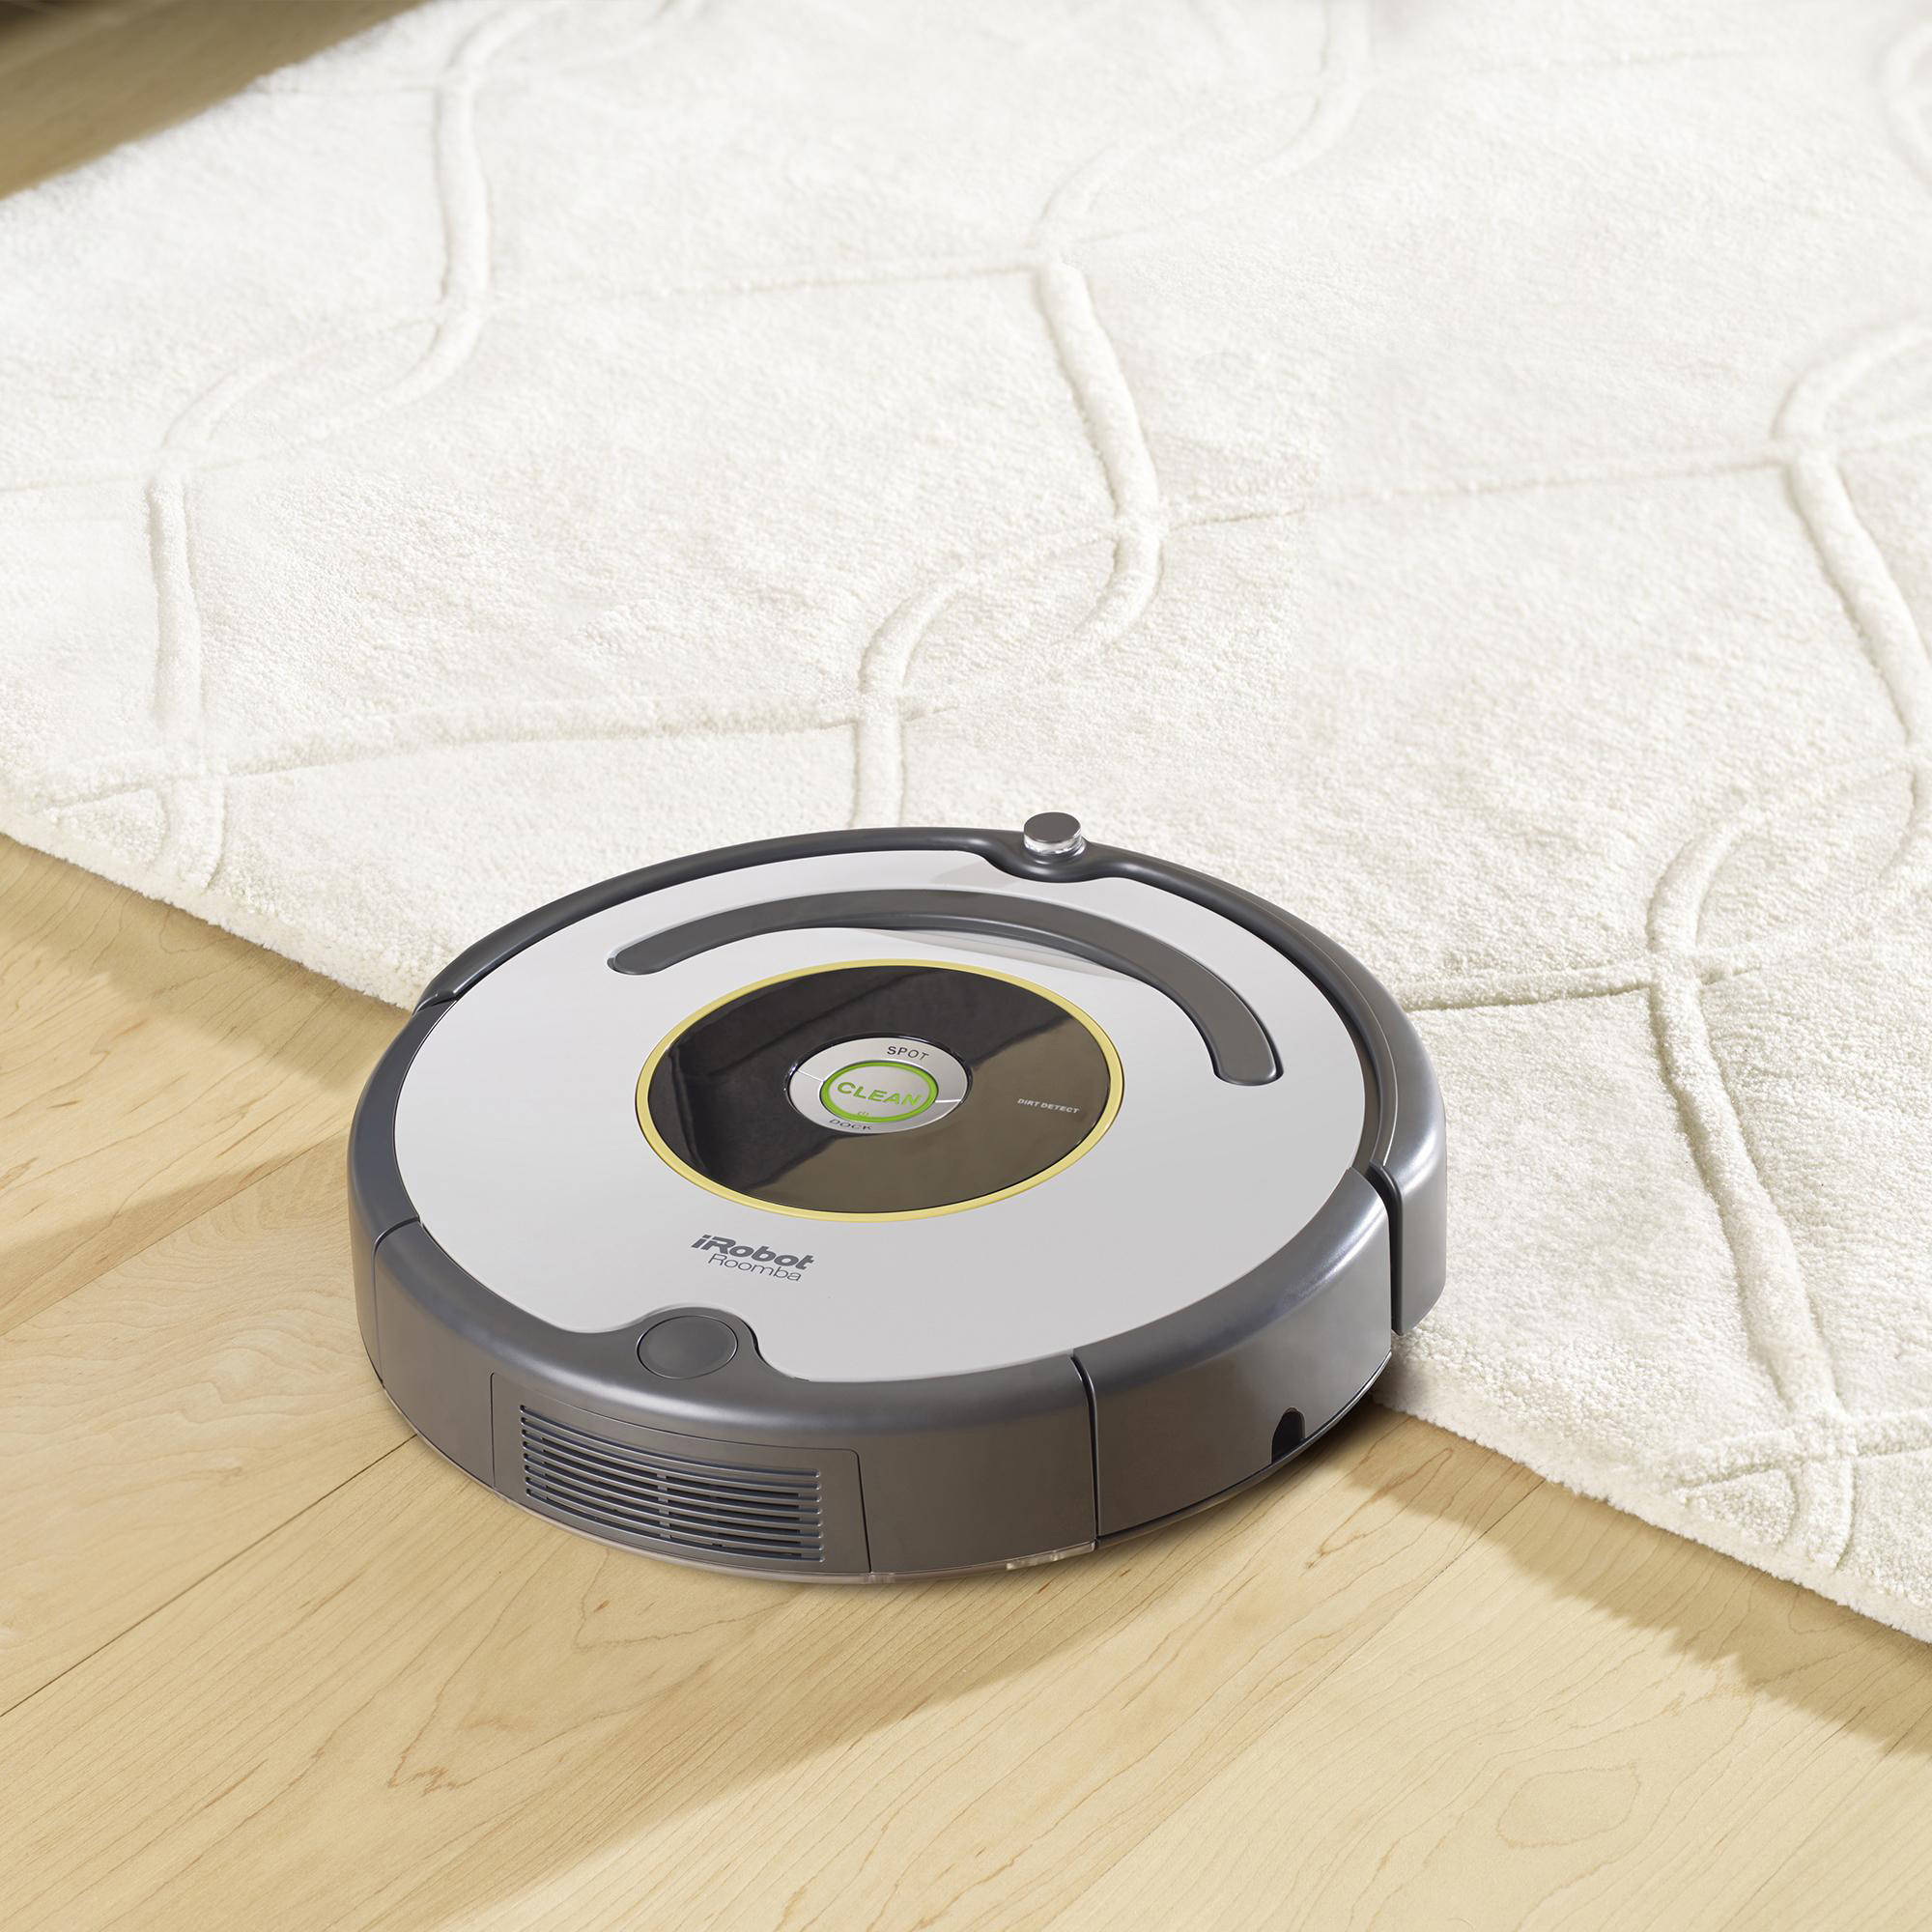 iRobot Roomba 618 Robot Vacuum - Good for Pet Hair, Carpets, Hard Floors, Self-Charging - image 4 of 6